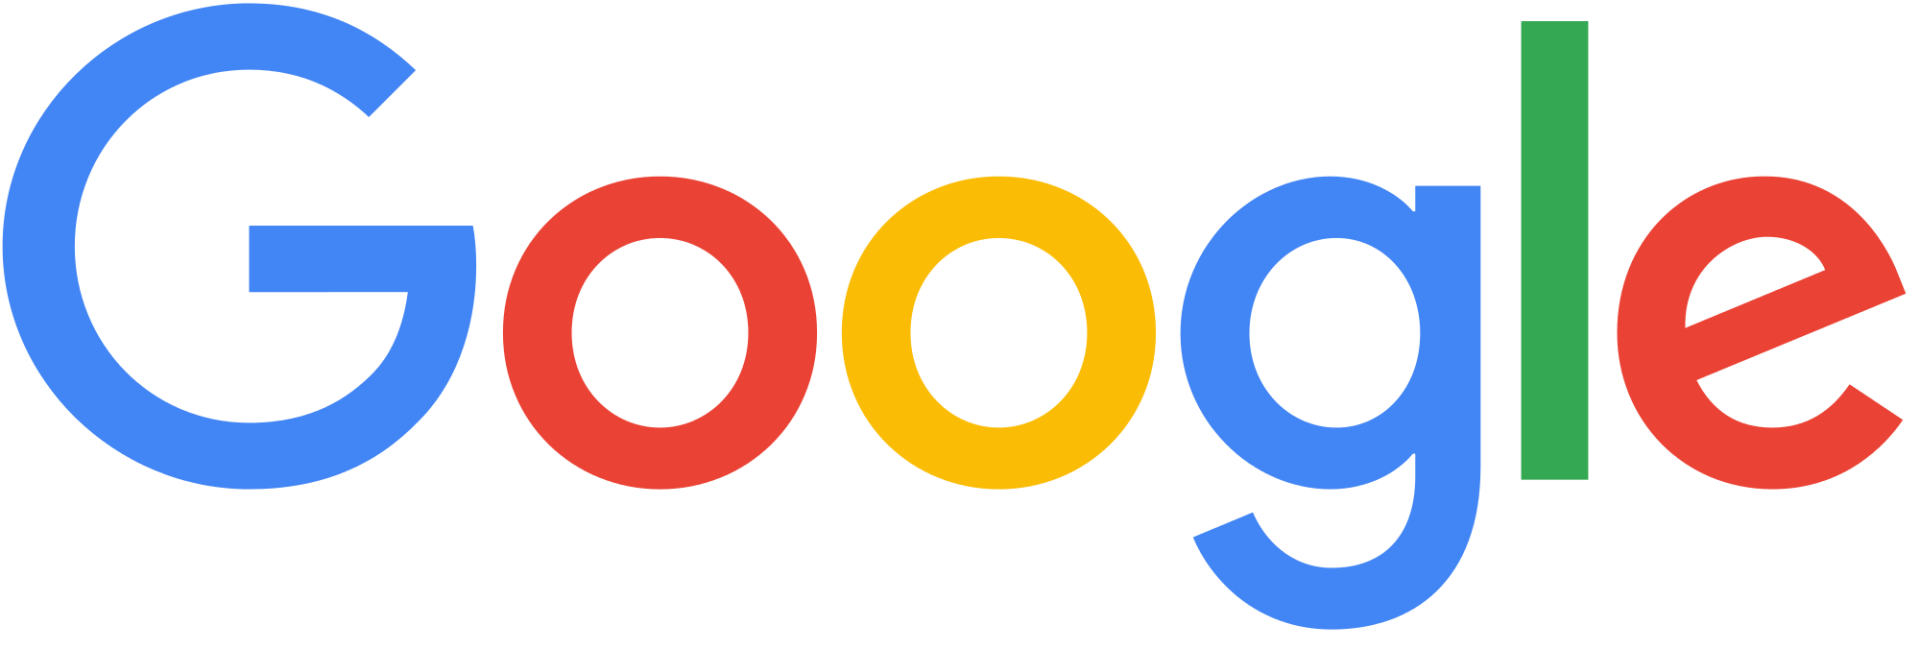 Emergency Restoration Company - Google 5 Star Review